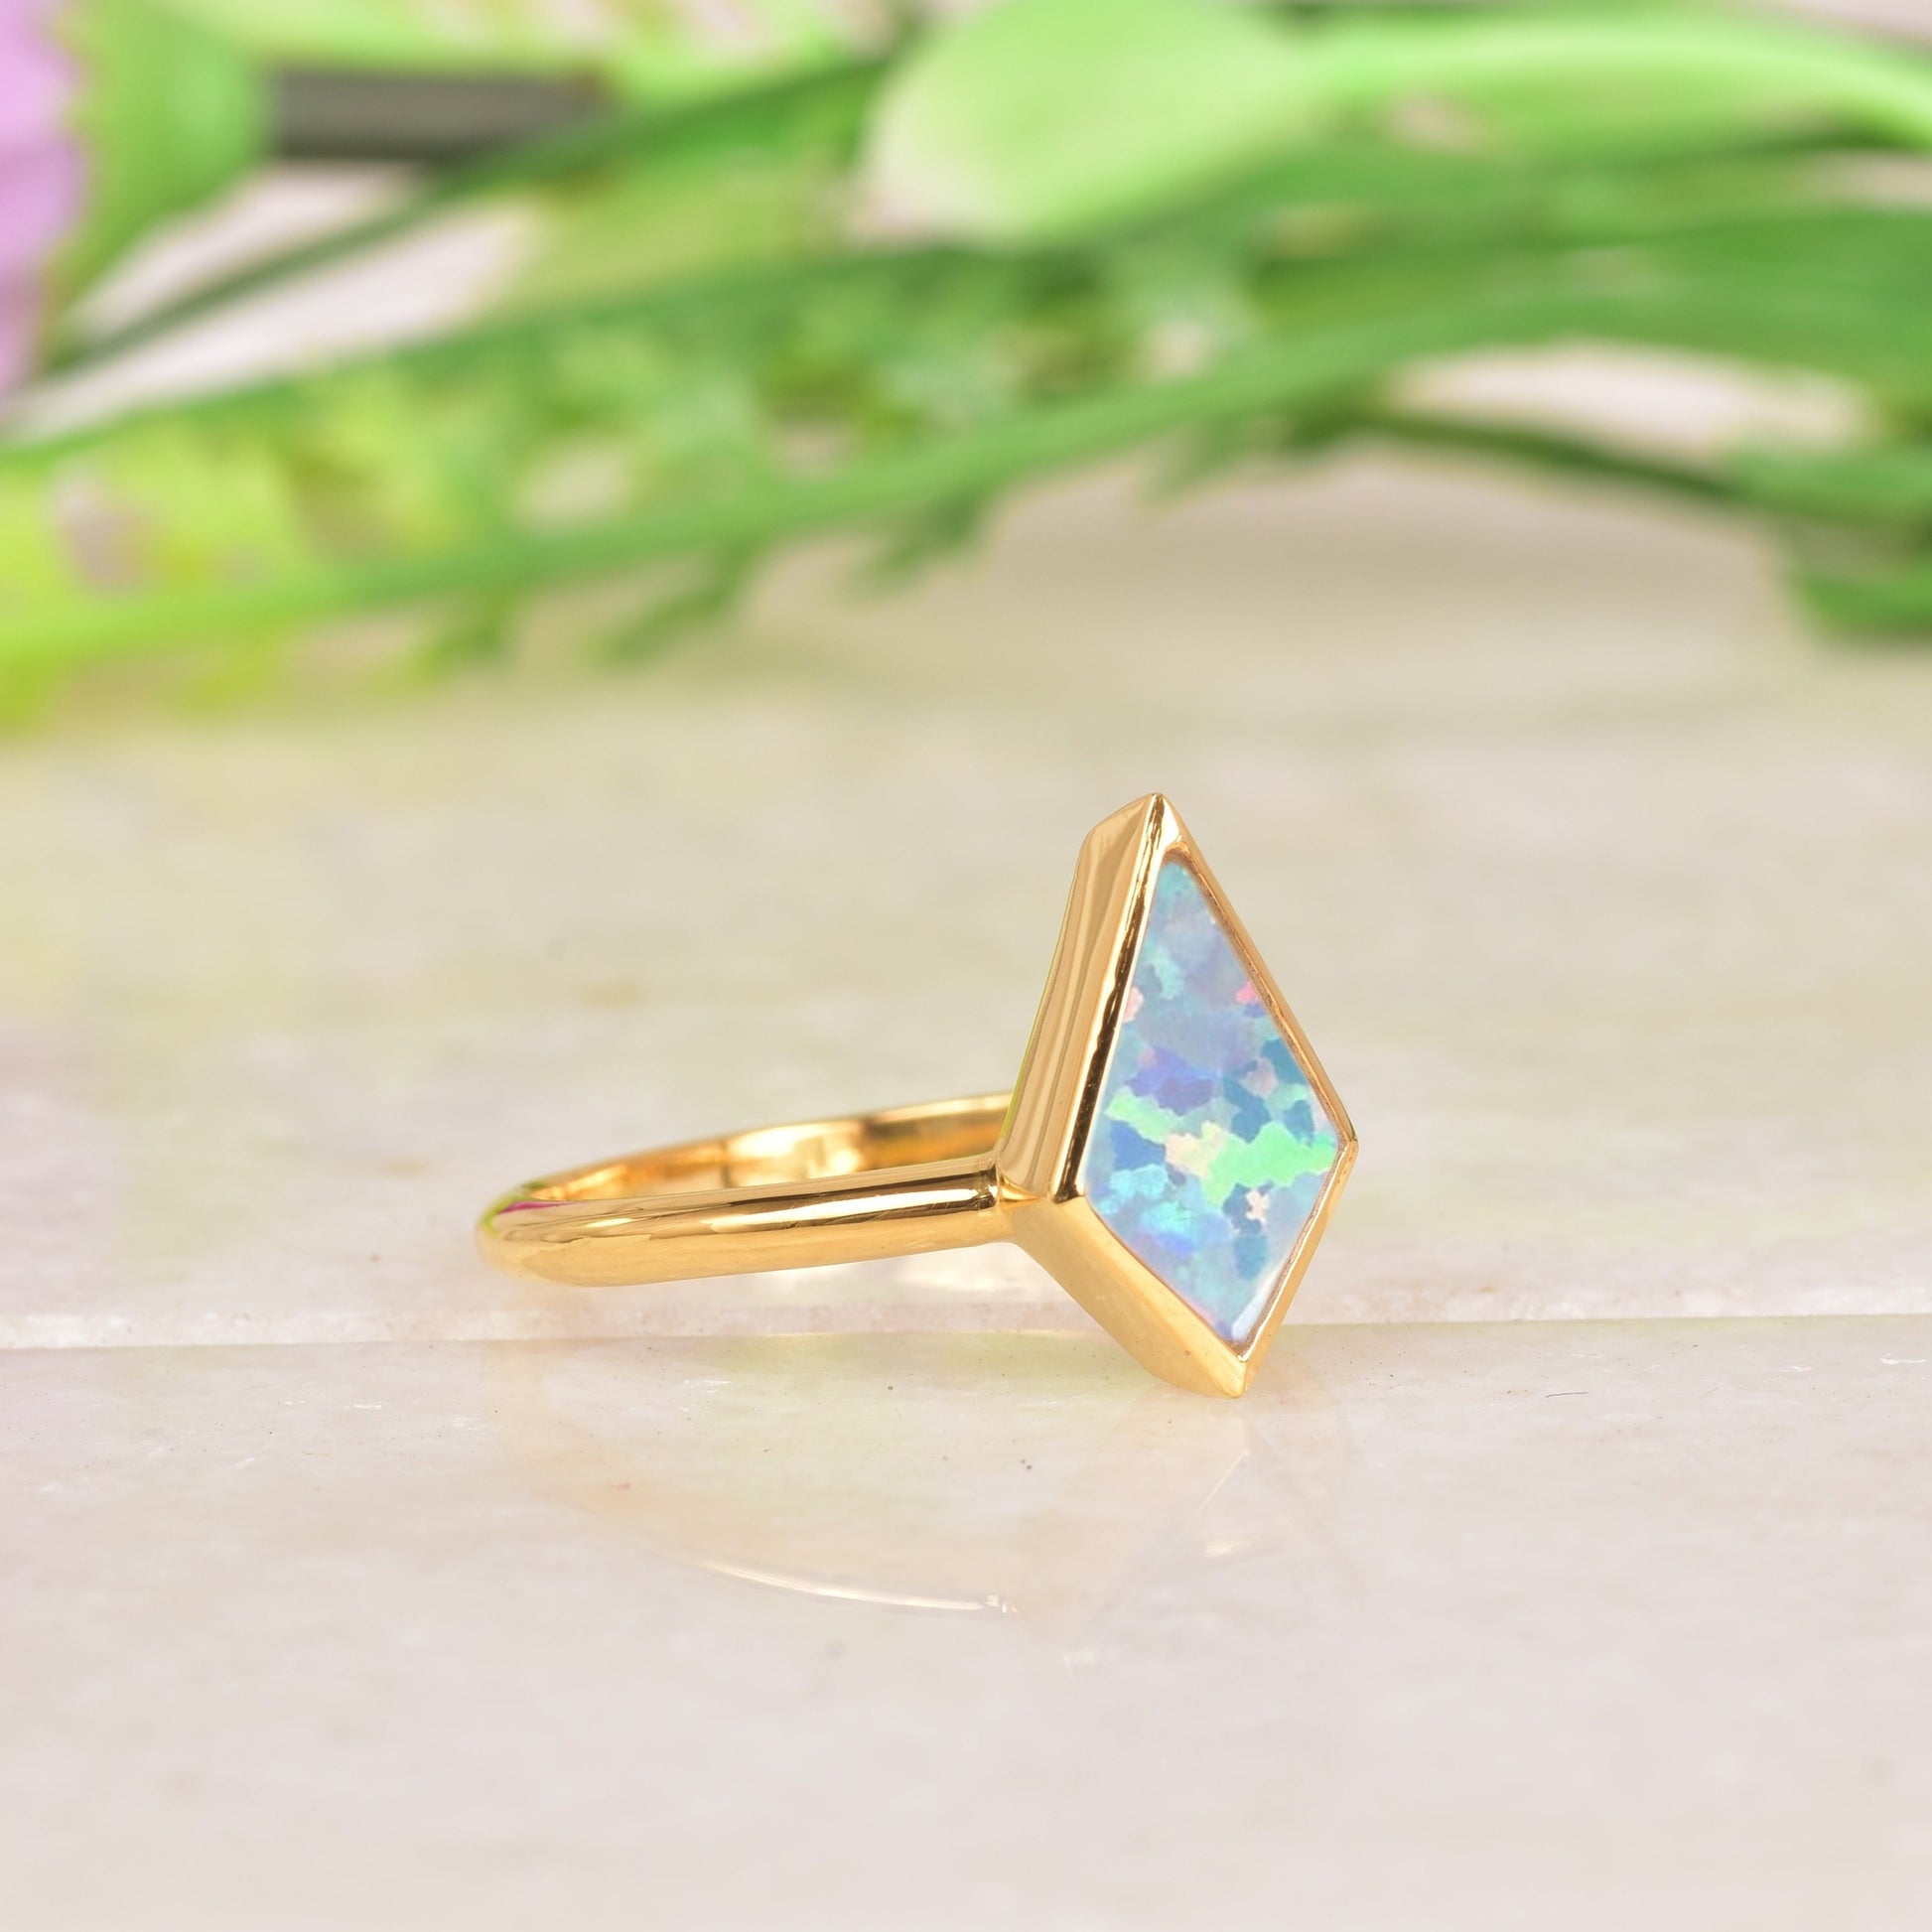 Kite Shaped White Opal Ring